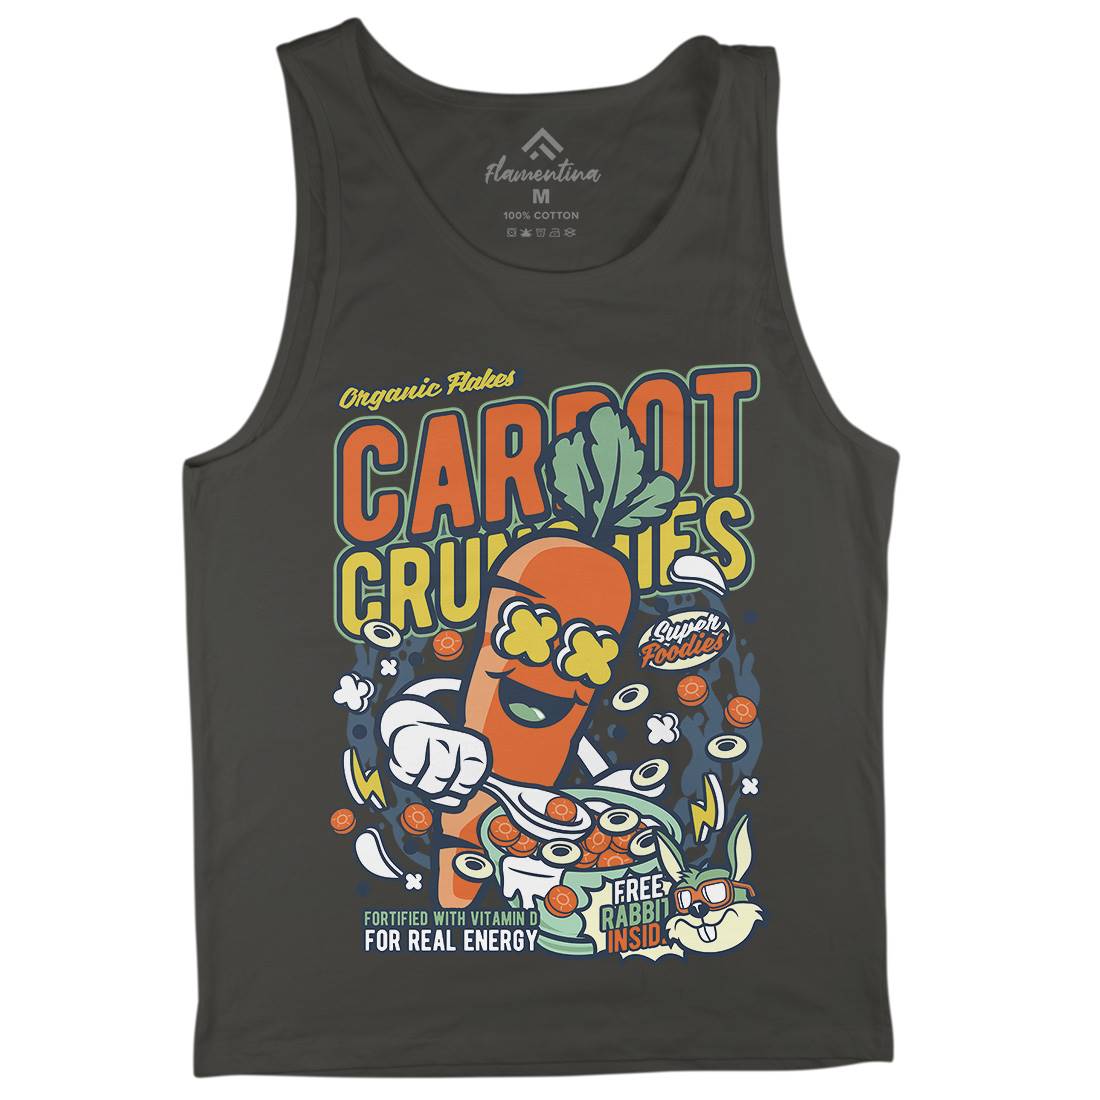 Carrot Crunchies Mens Tank Top Vest Food C509